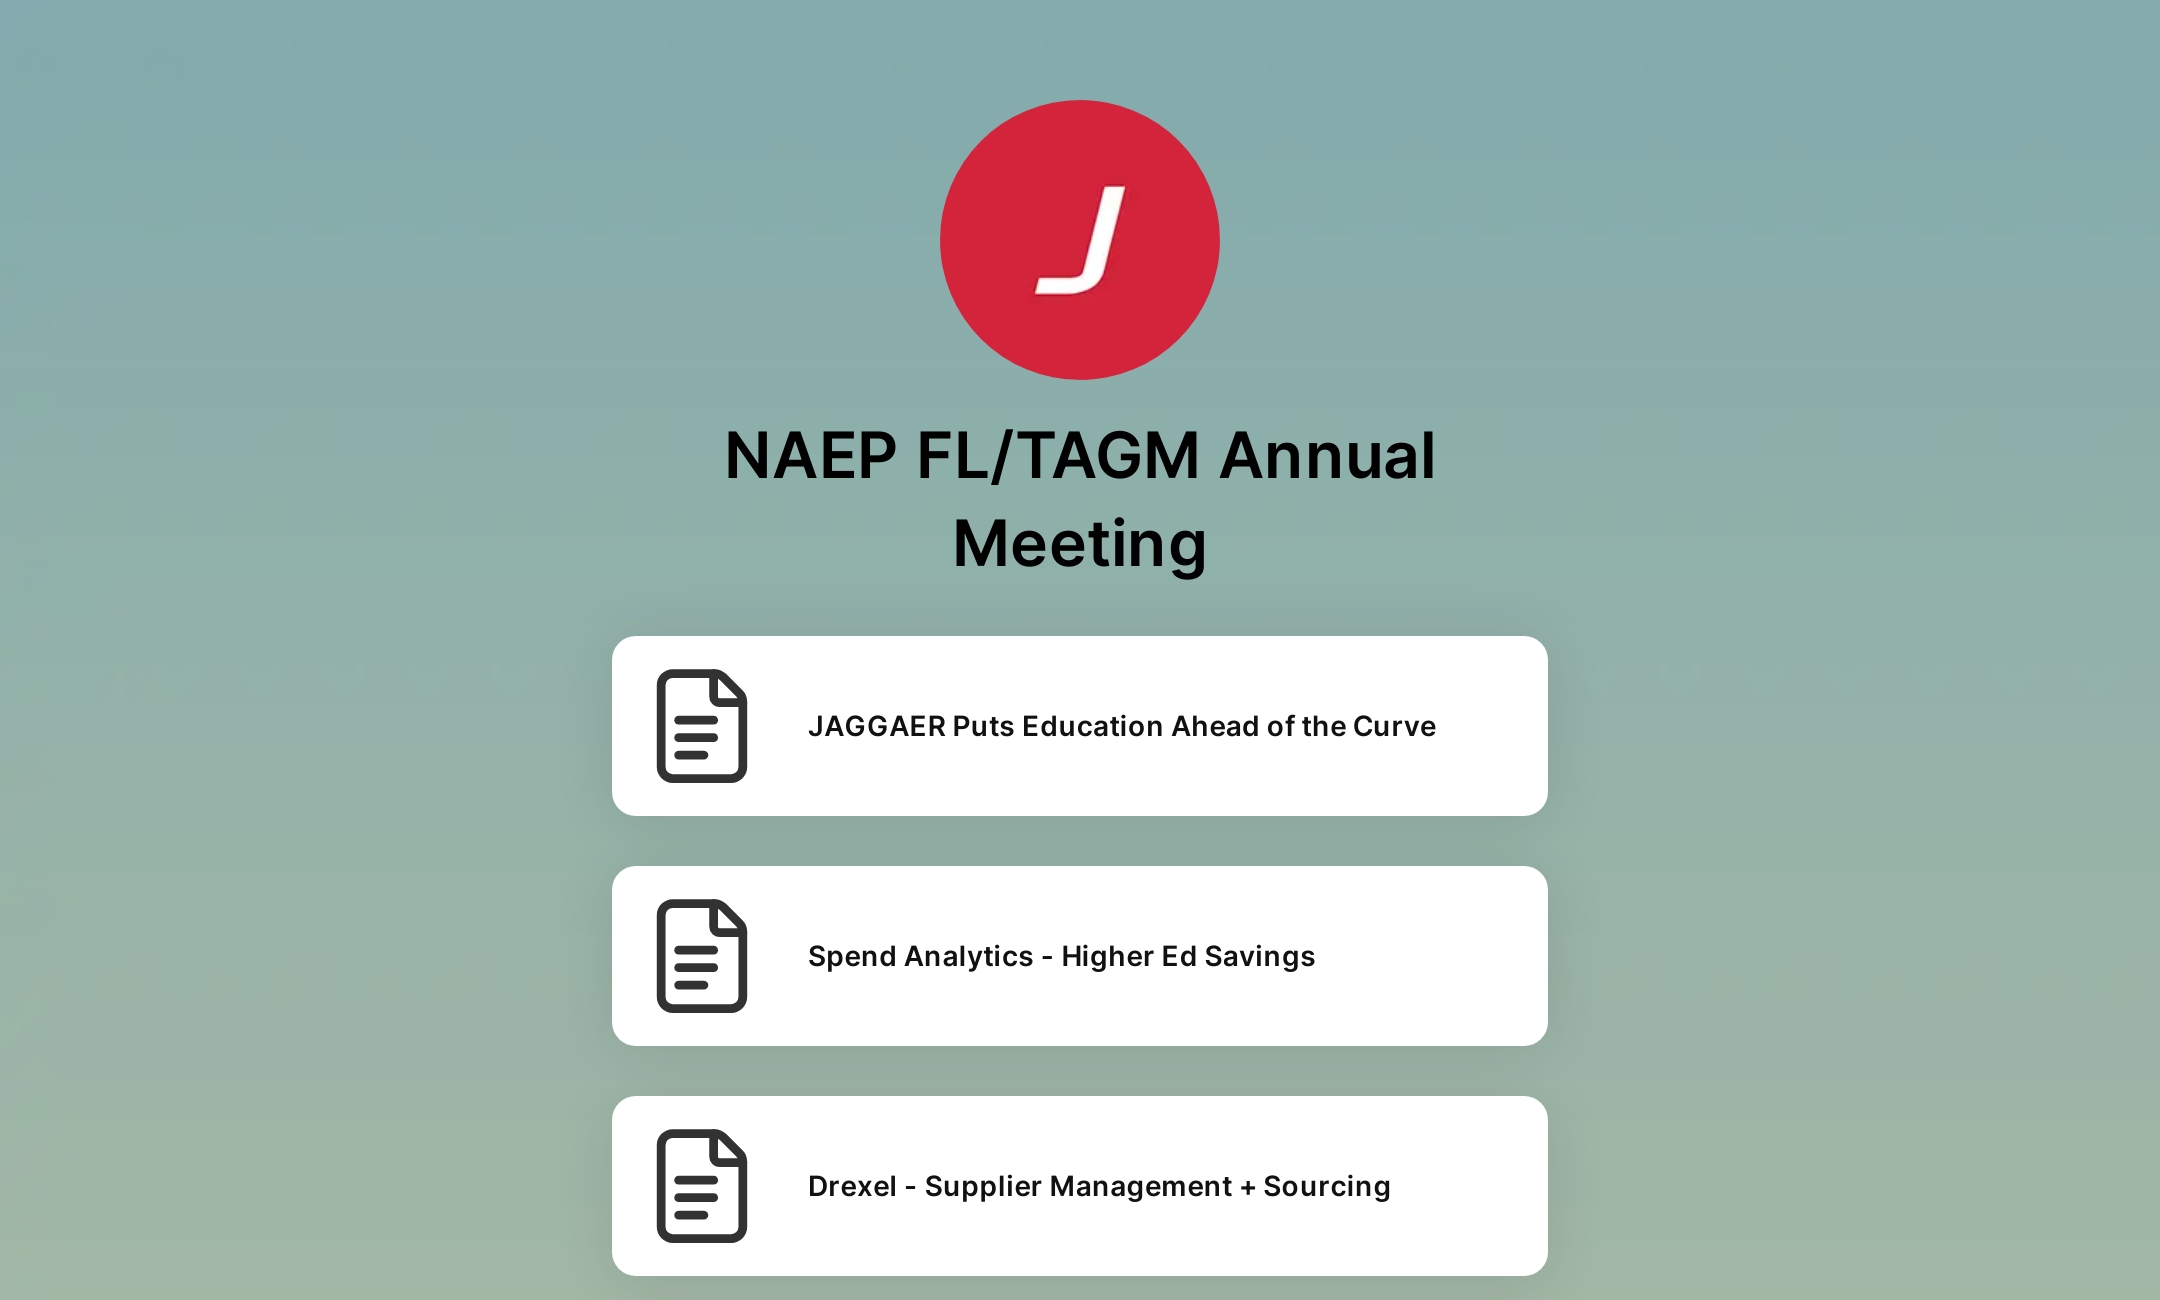 NAEP FL/TAGM Annual Meeting's Flowpage